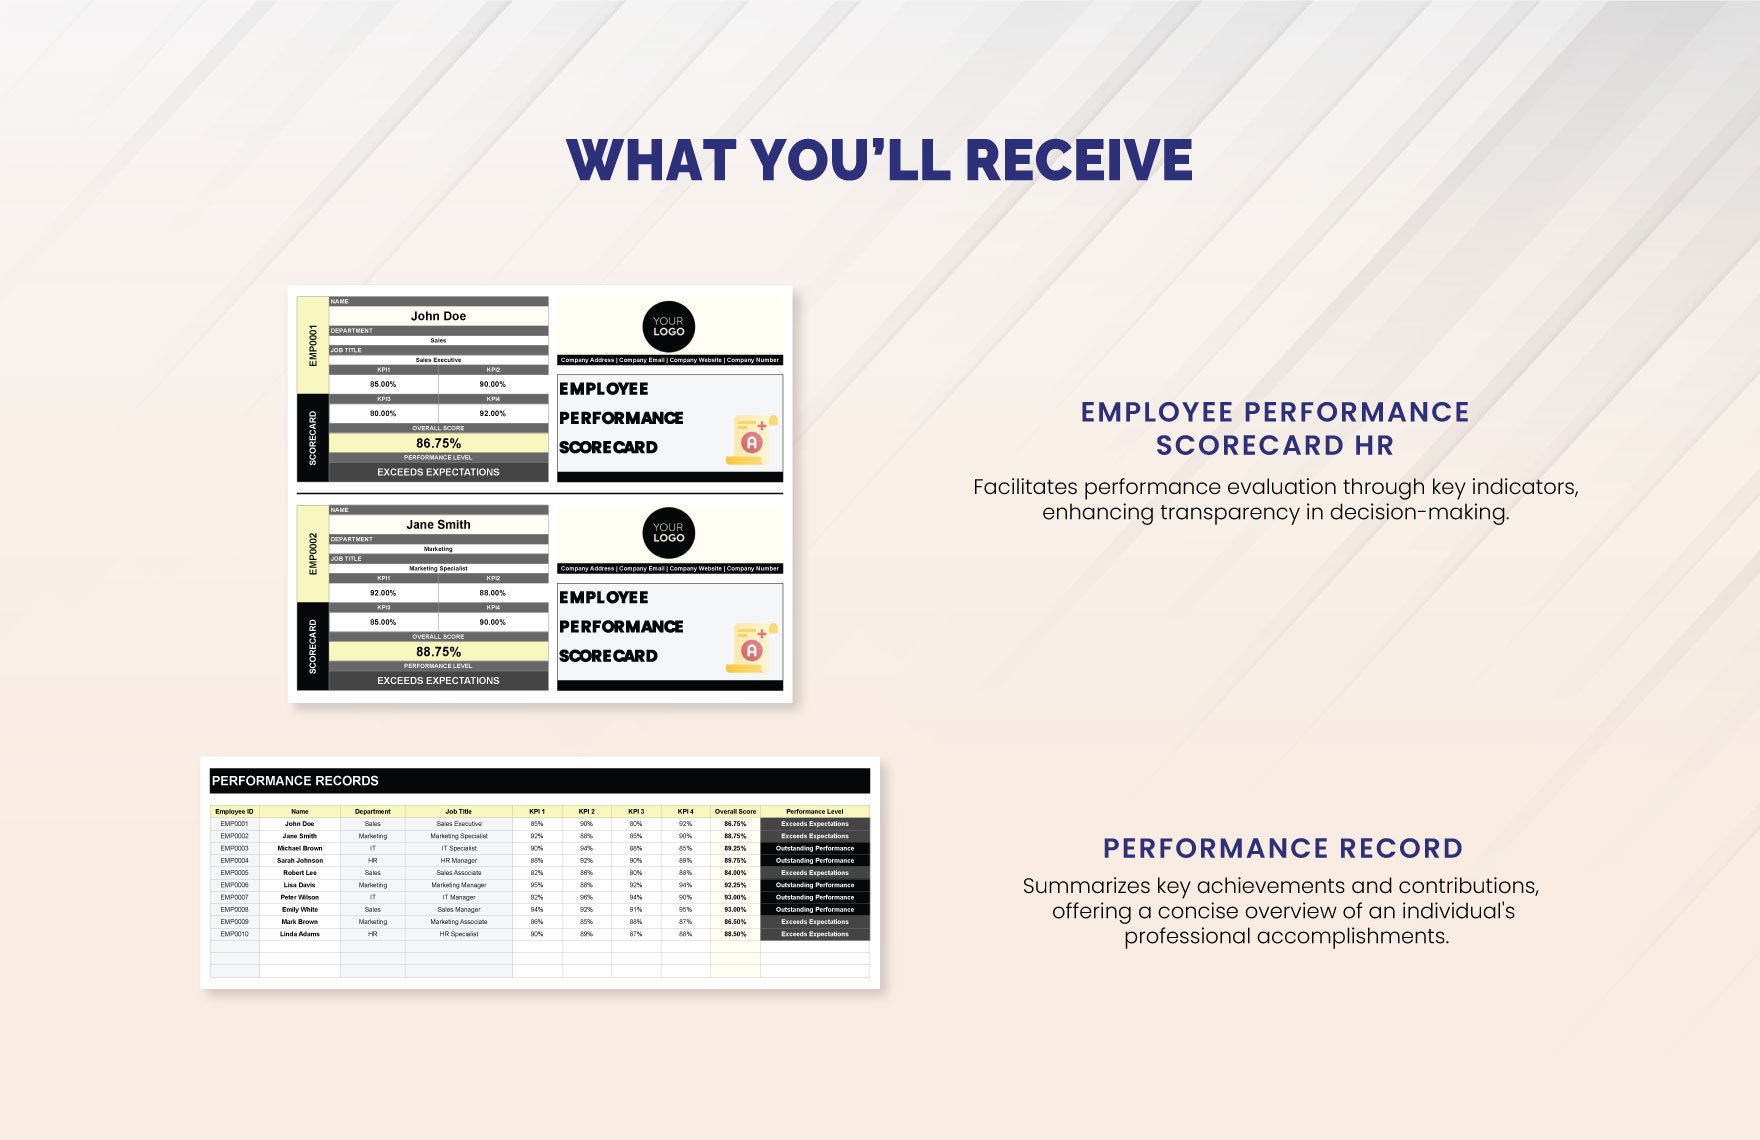 Employee Performance Scorecard HR Template